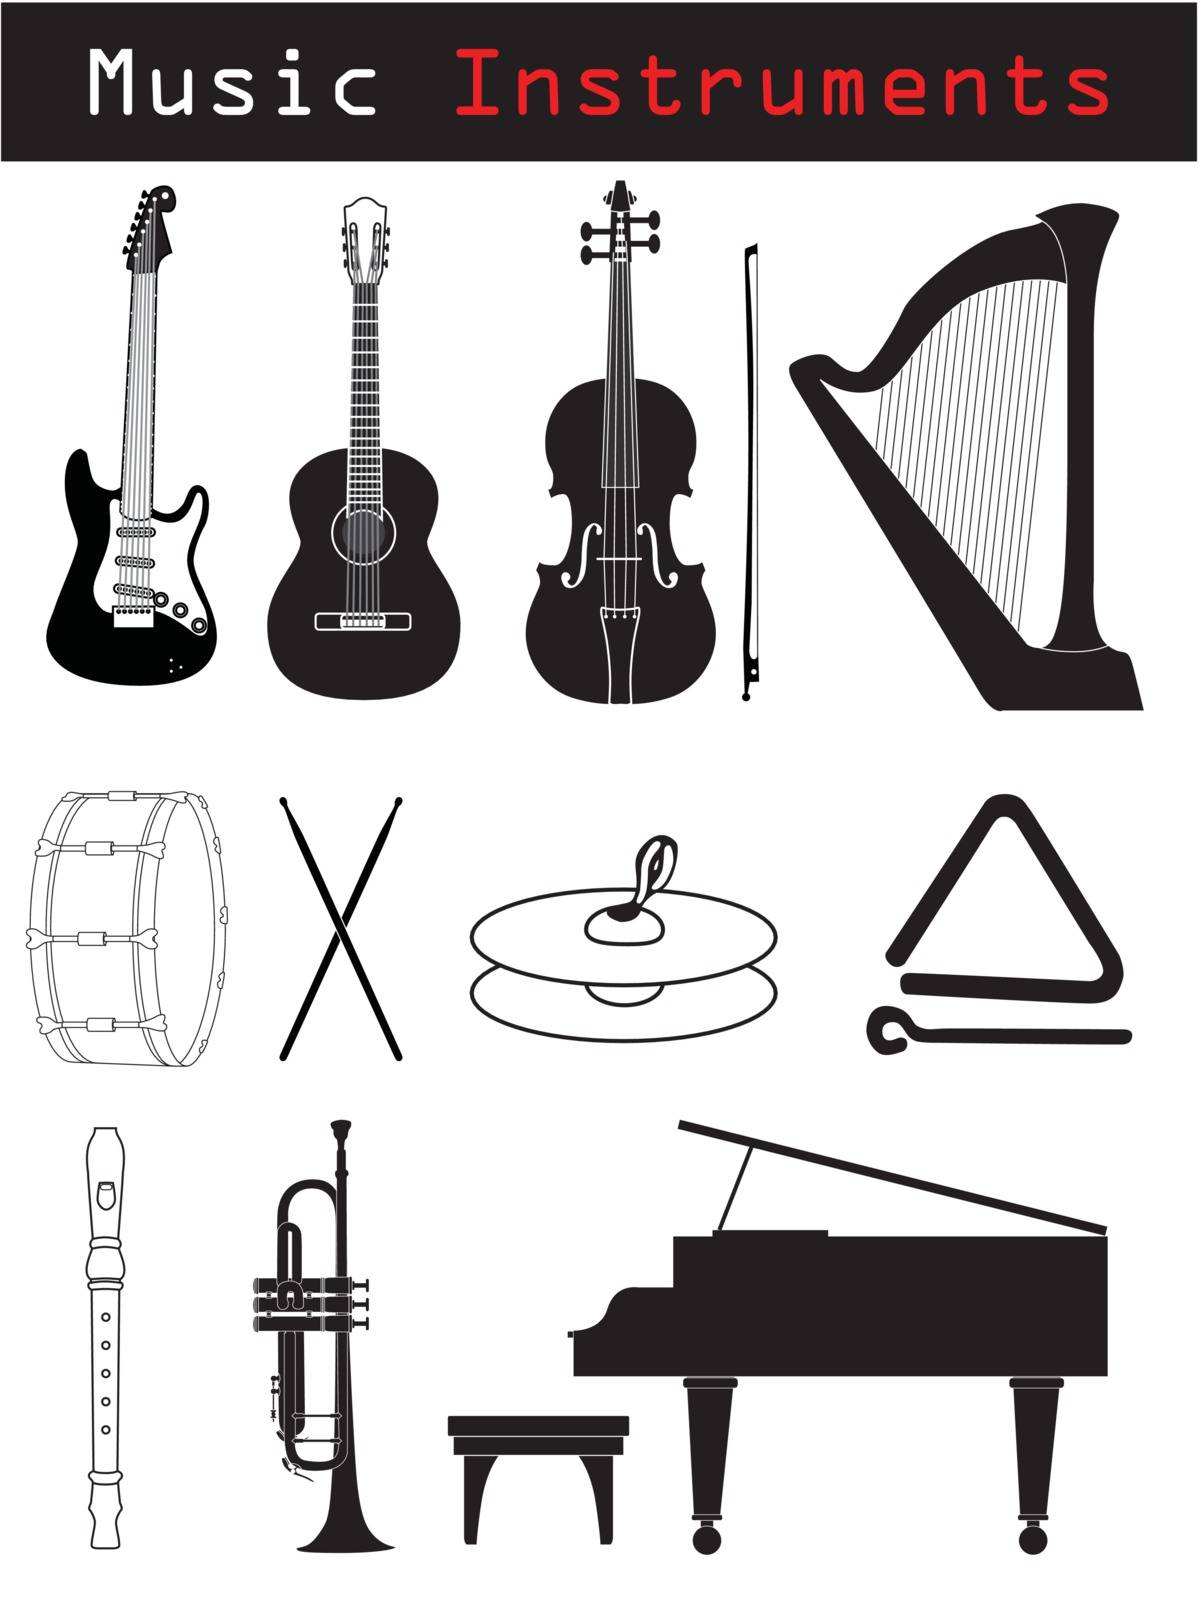 Music Instruments  by vipervxw